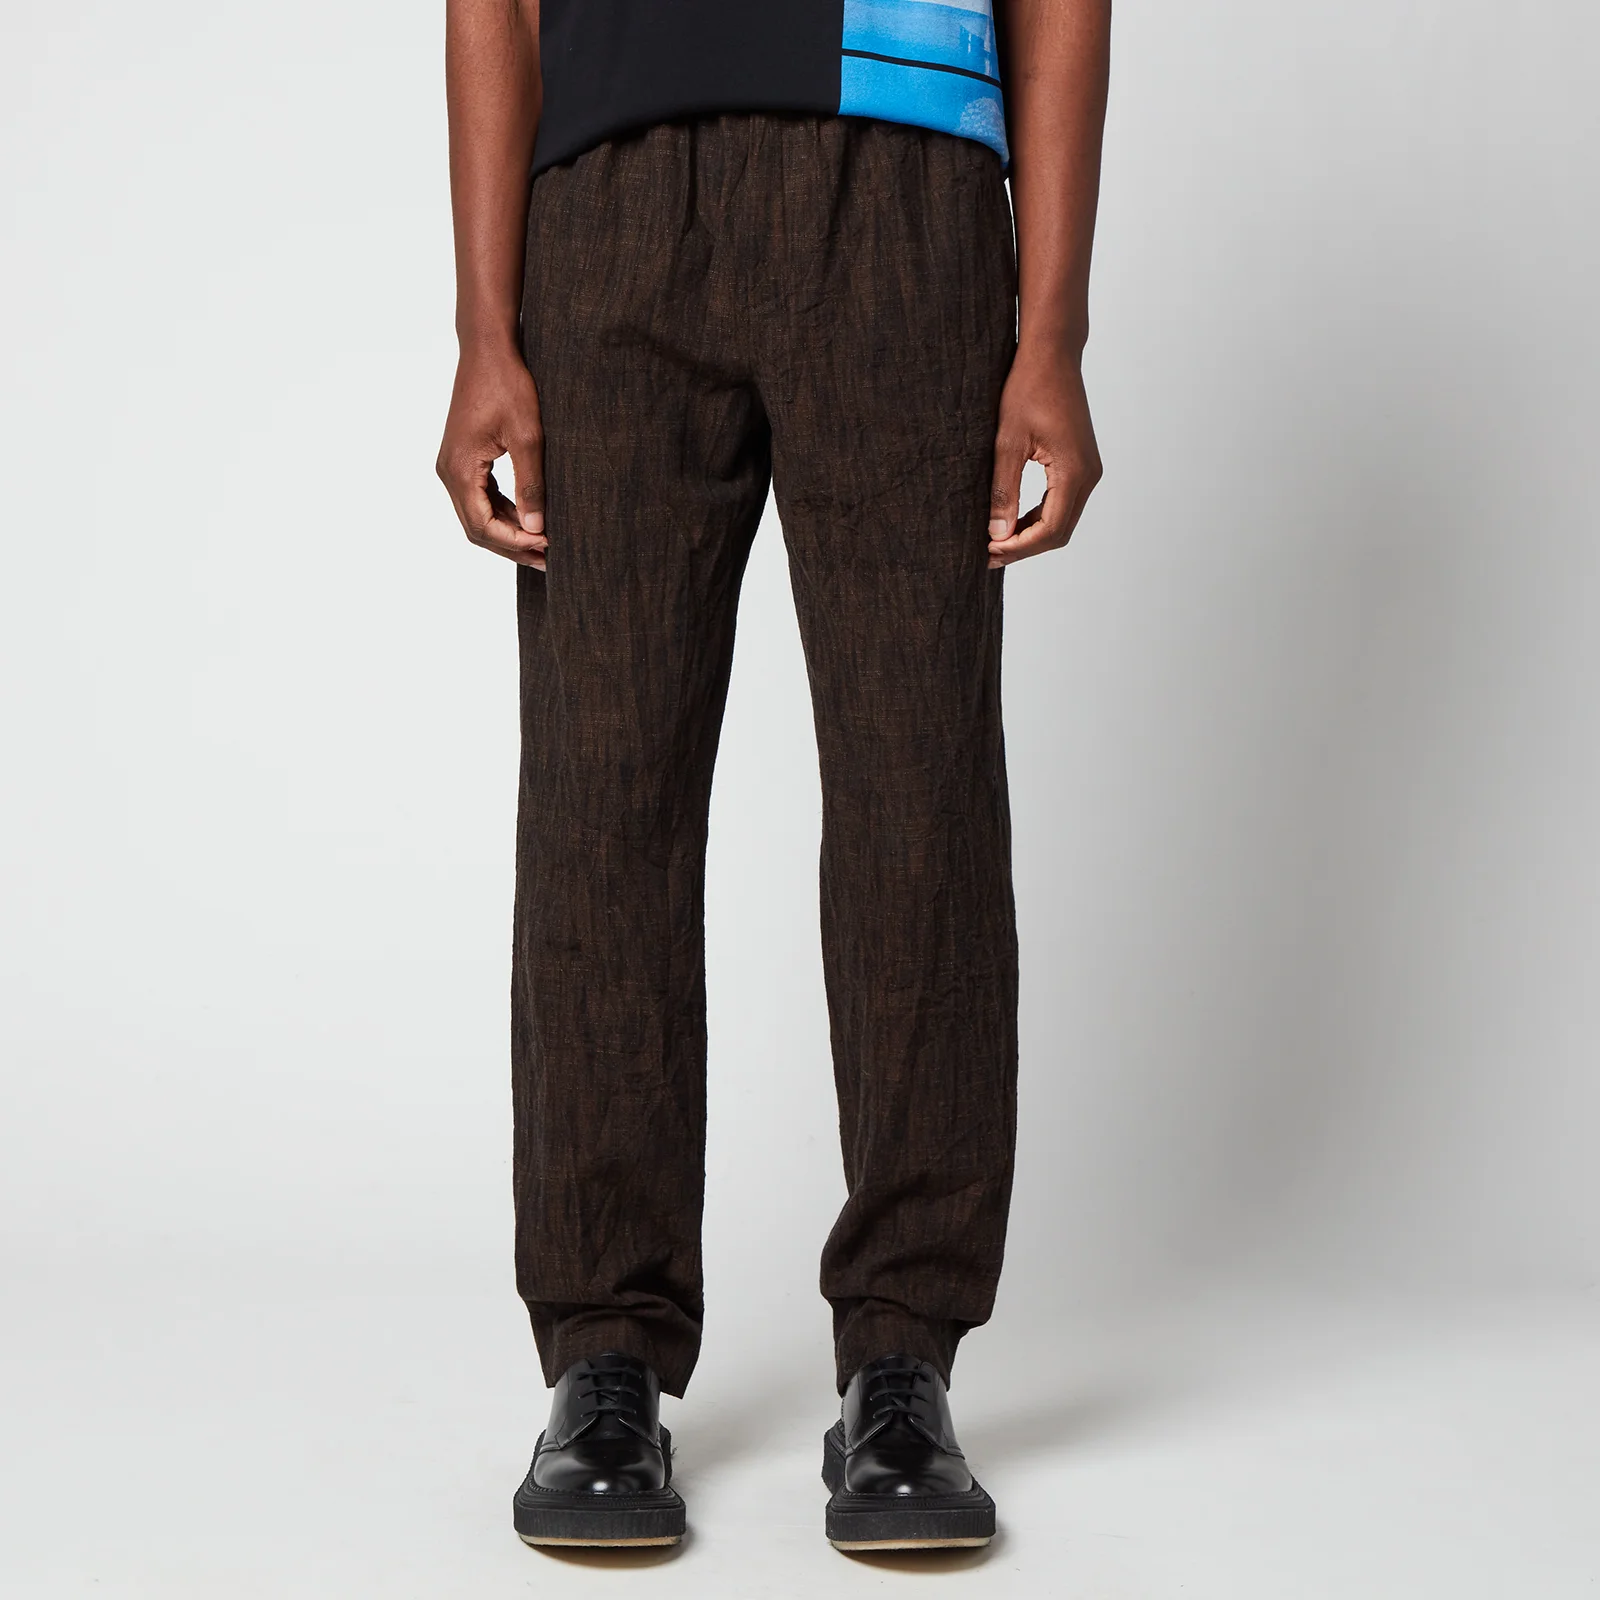 A-COLD-WALL* Men's Crinkle Suit Pants - Dark Brown Image 1